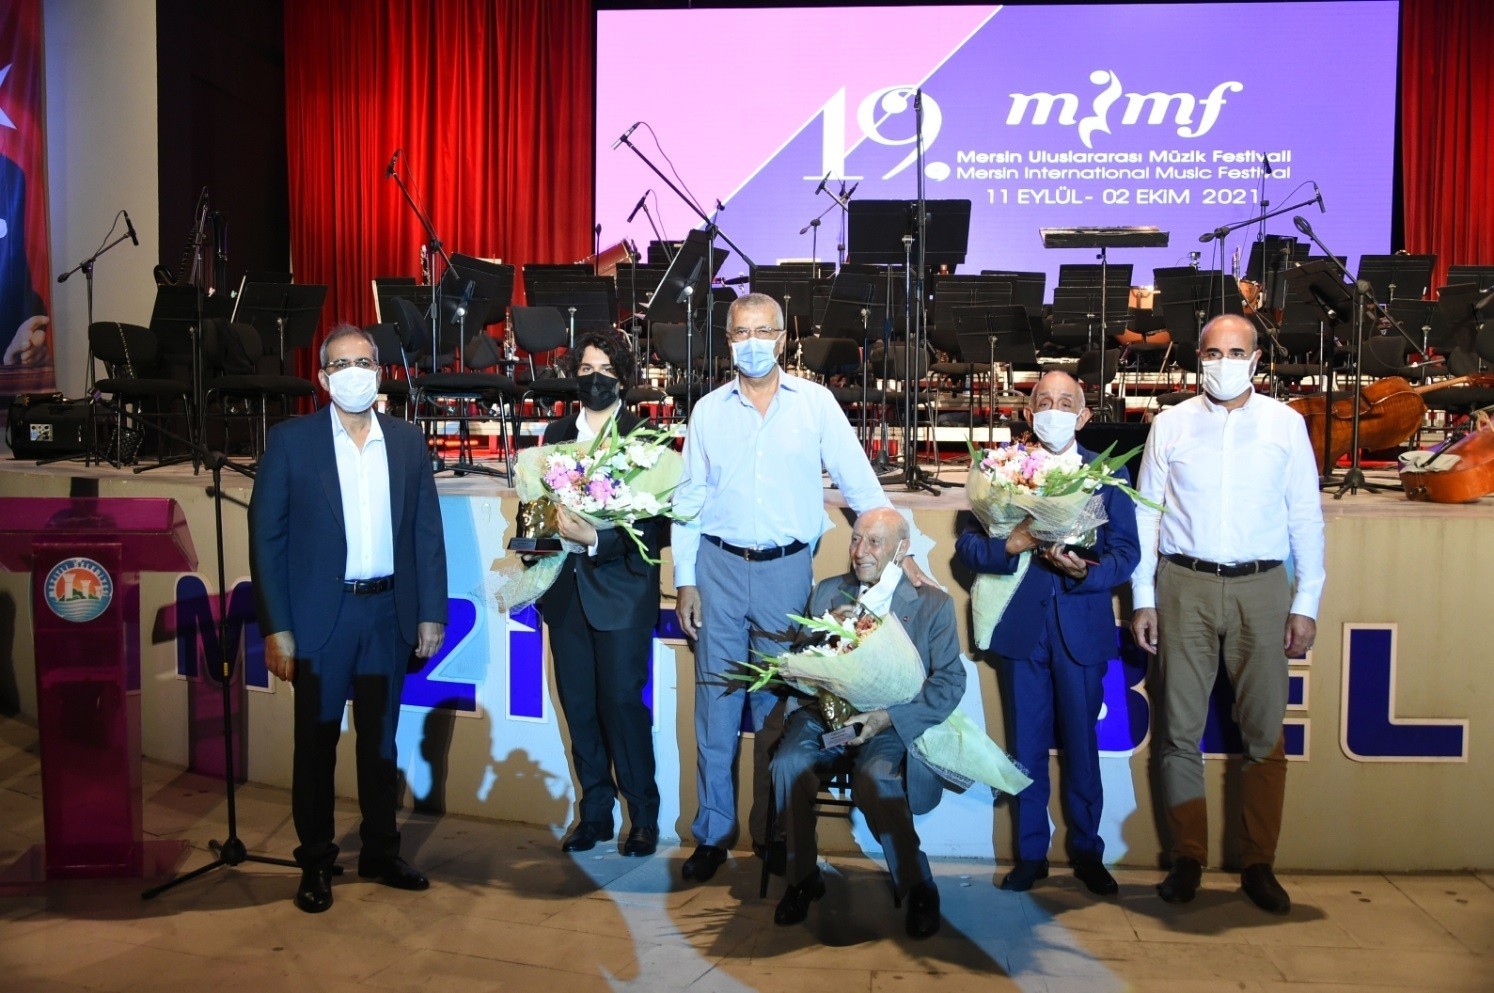 19 mersin uluslararasi muzik festivali gala konseriyle basladi